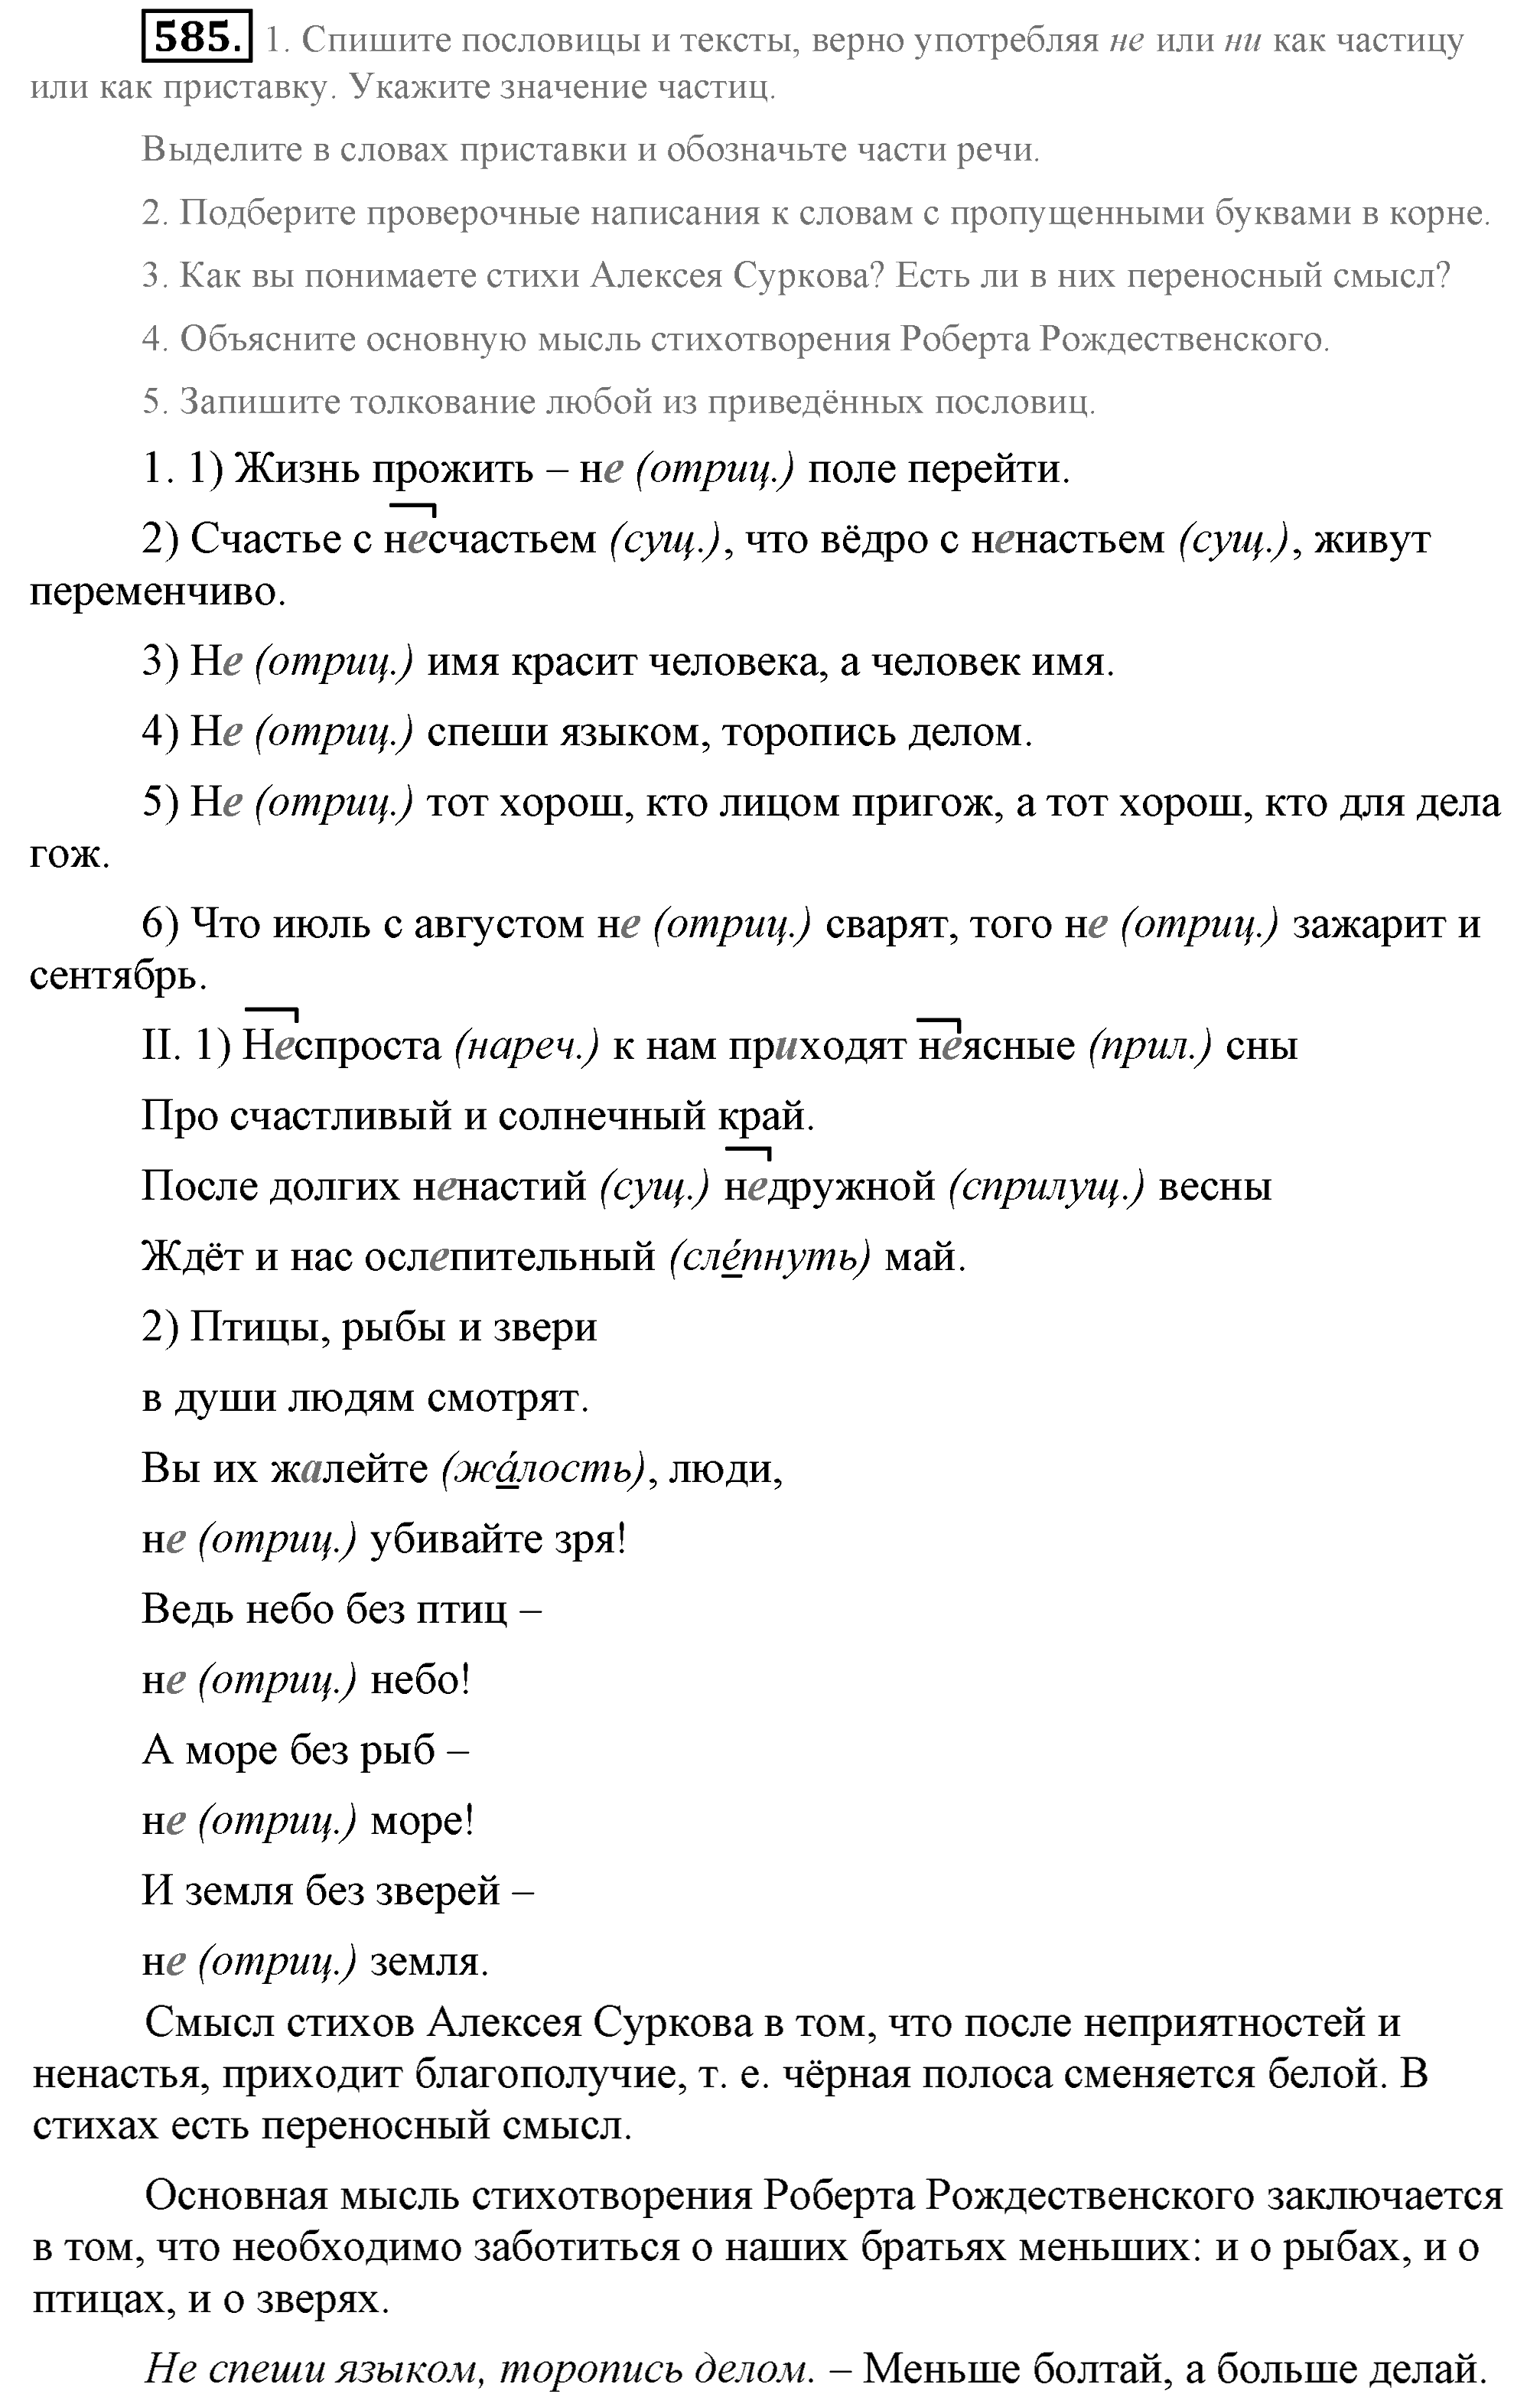 Практика, 7 класс, М.М. Разумовская, 2009, задача: 585